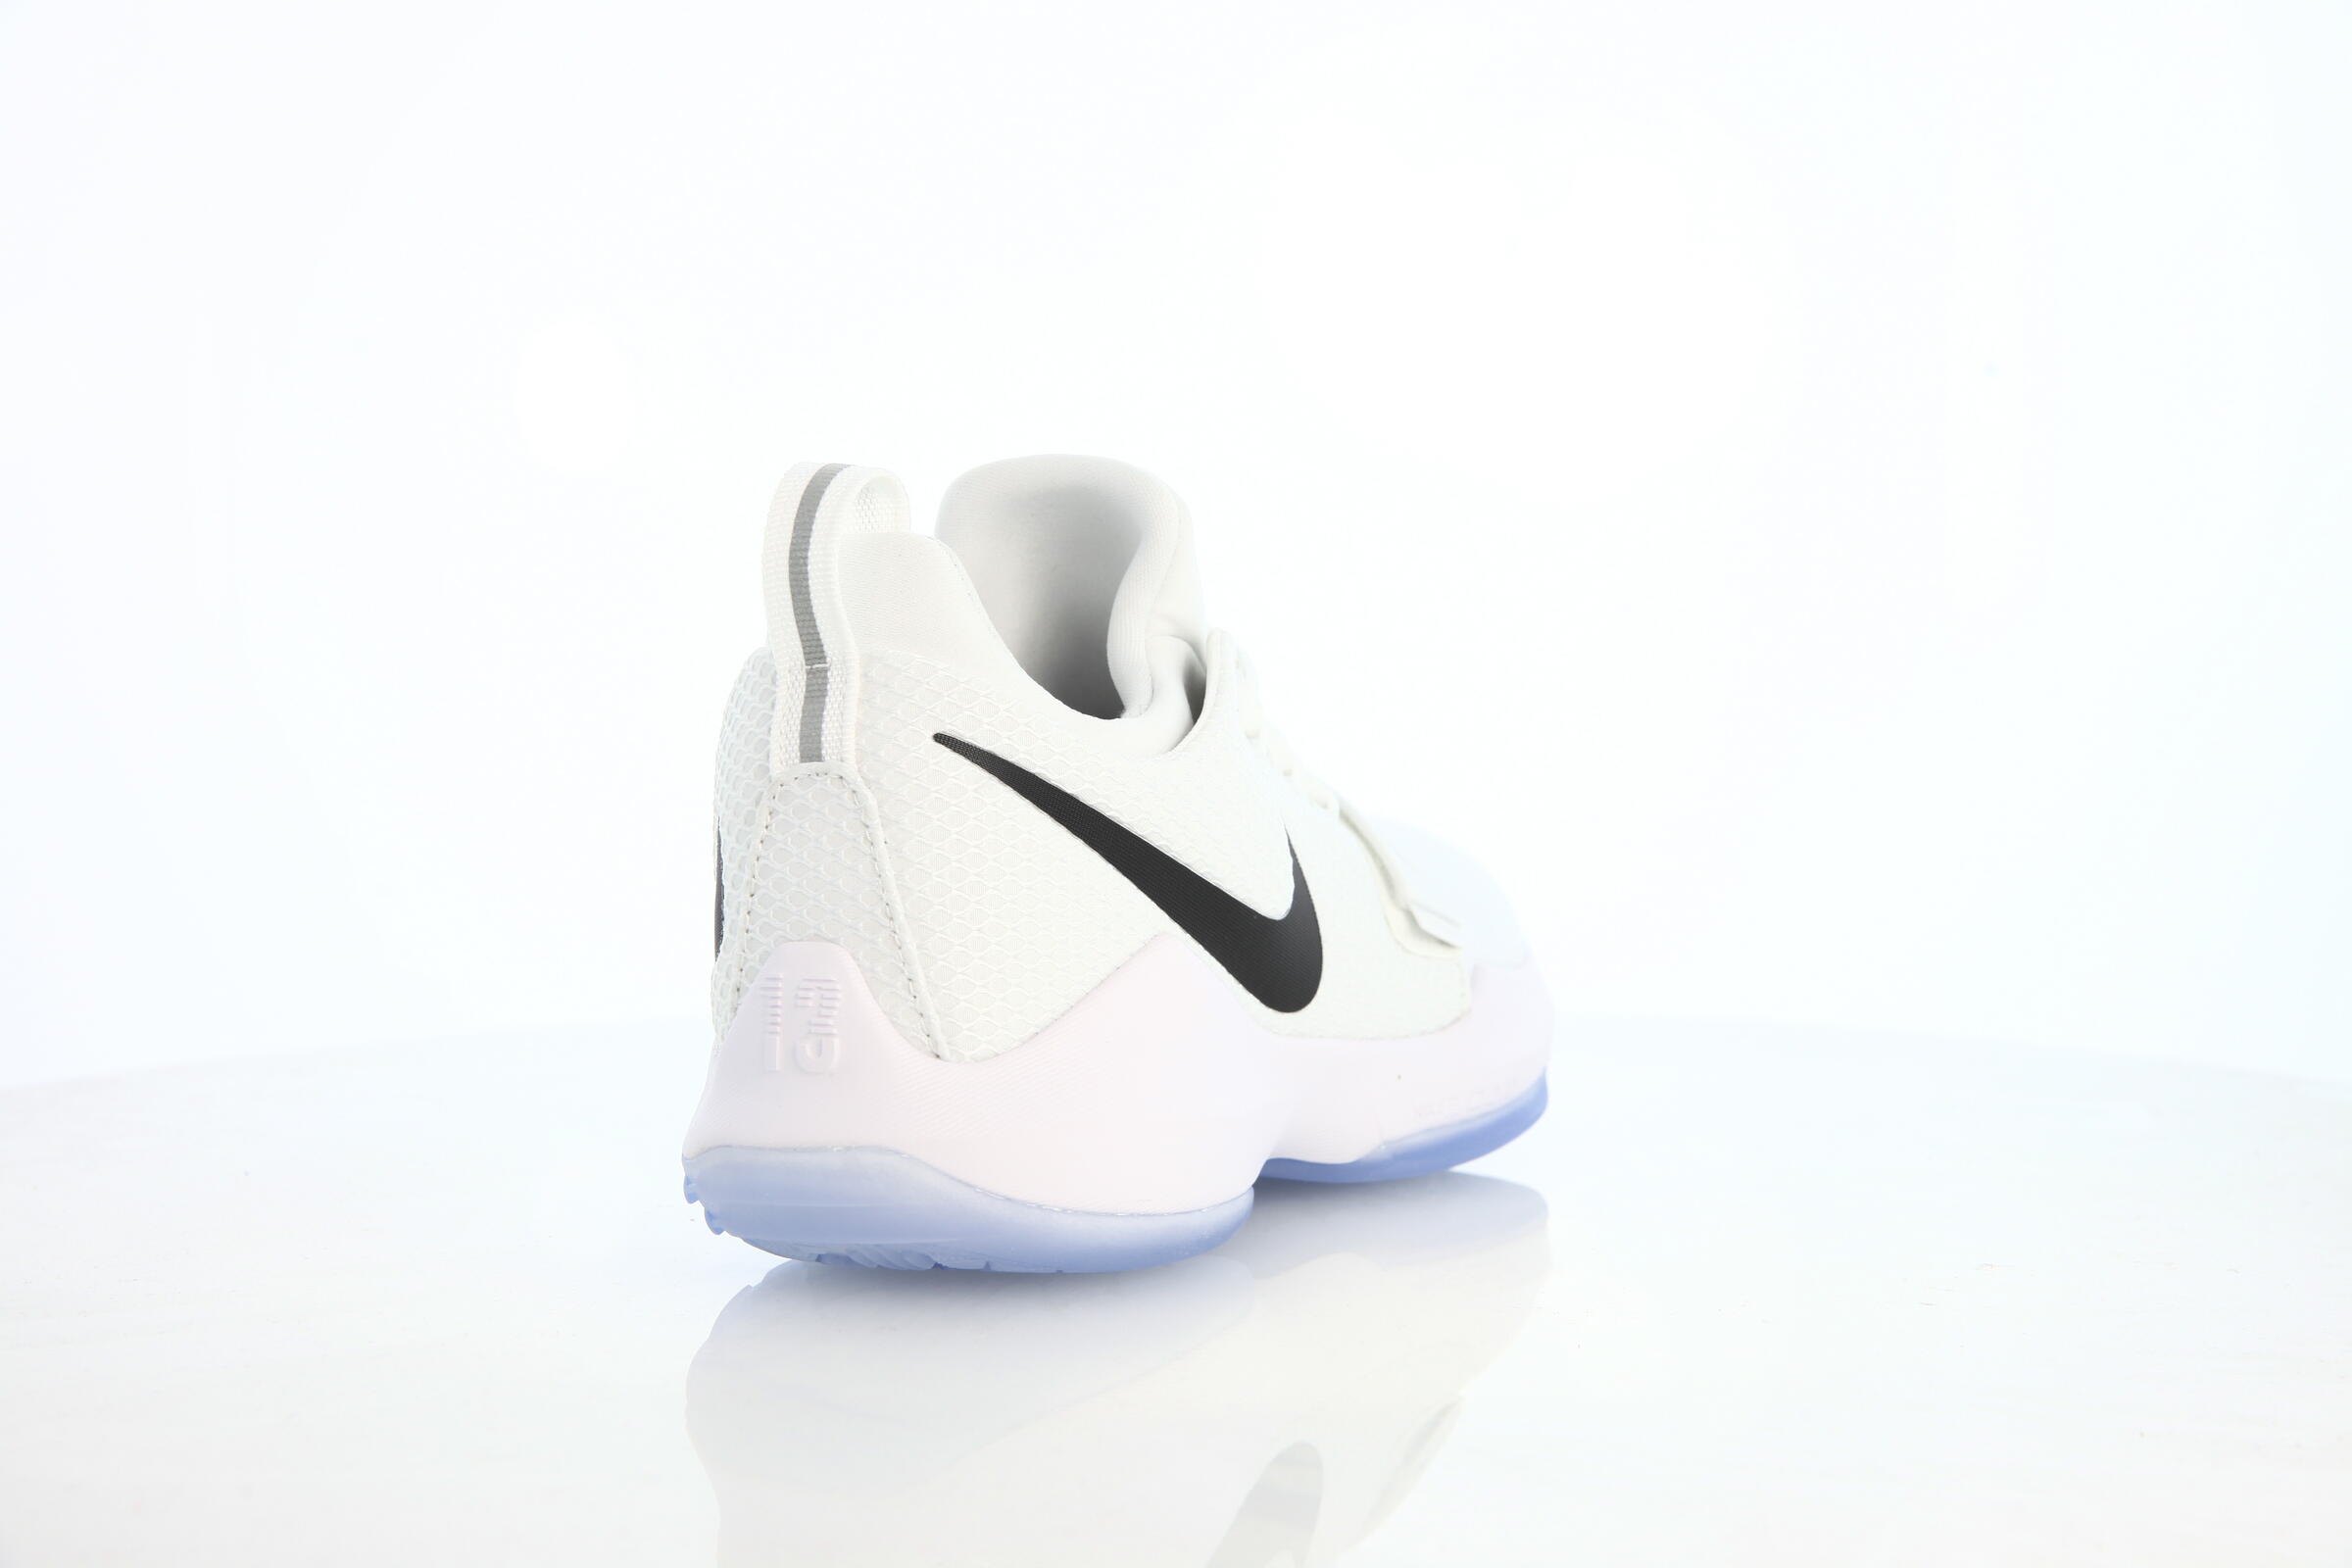 Nike Pg 1 "White"